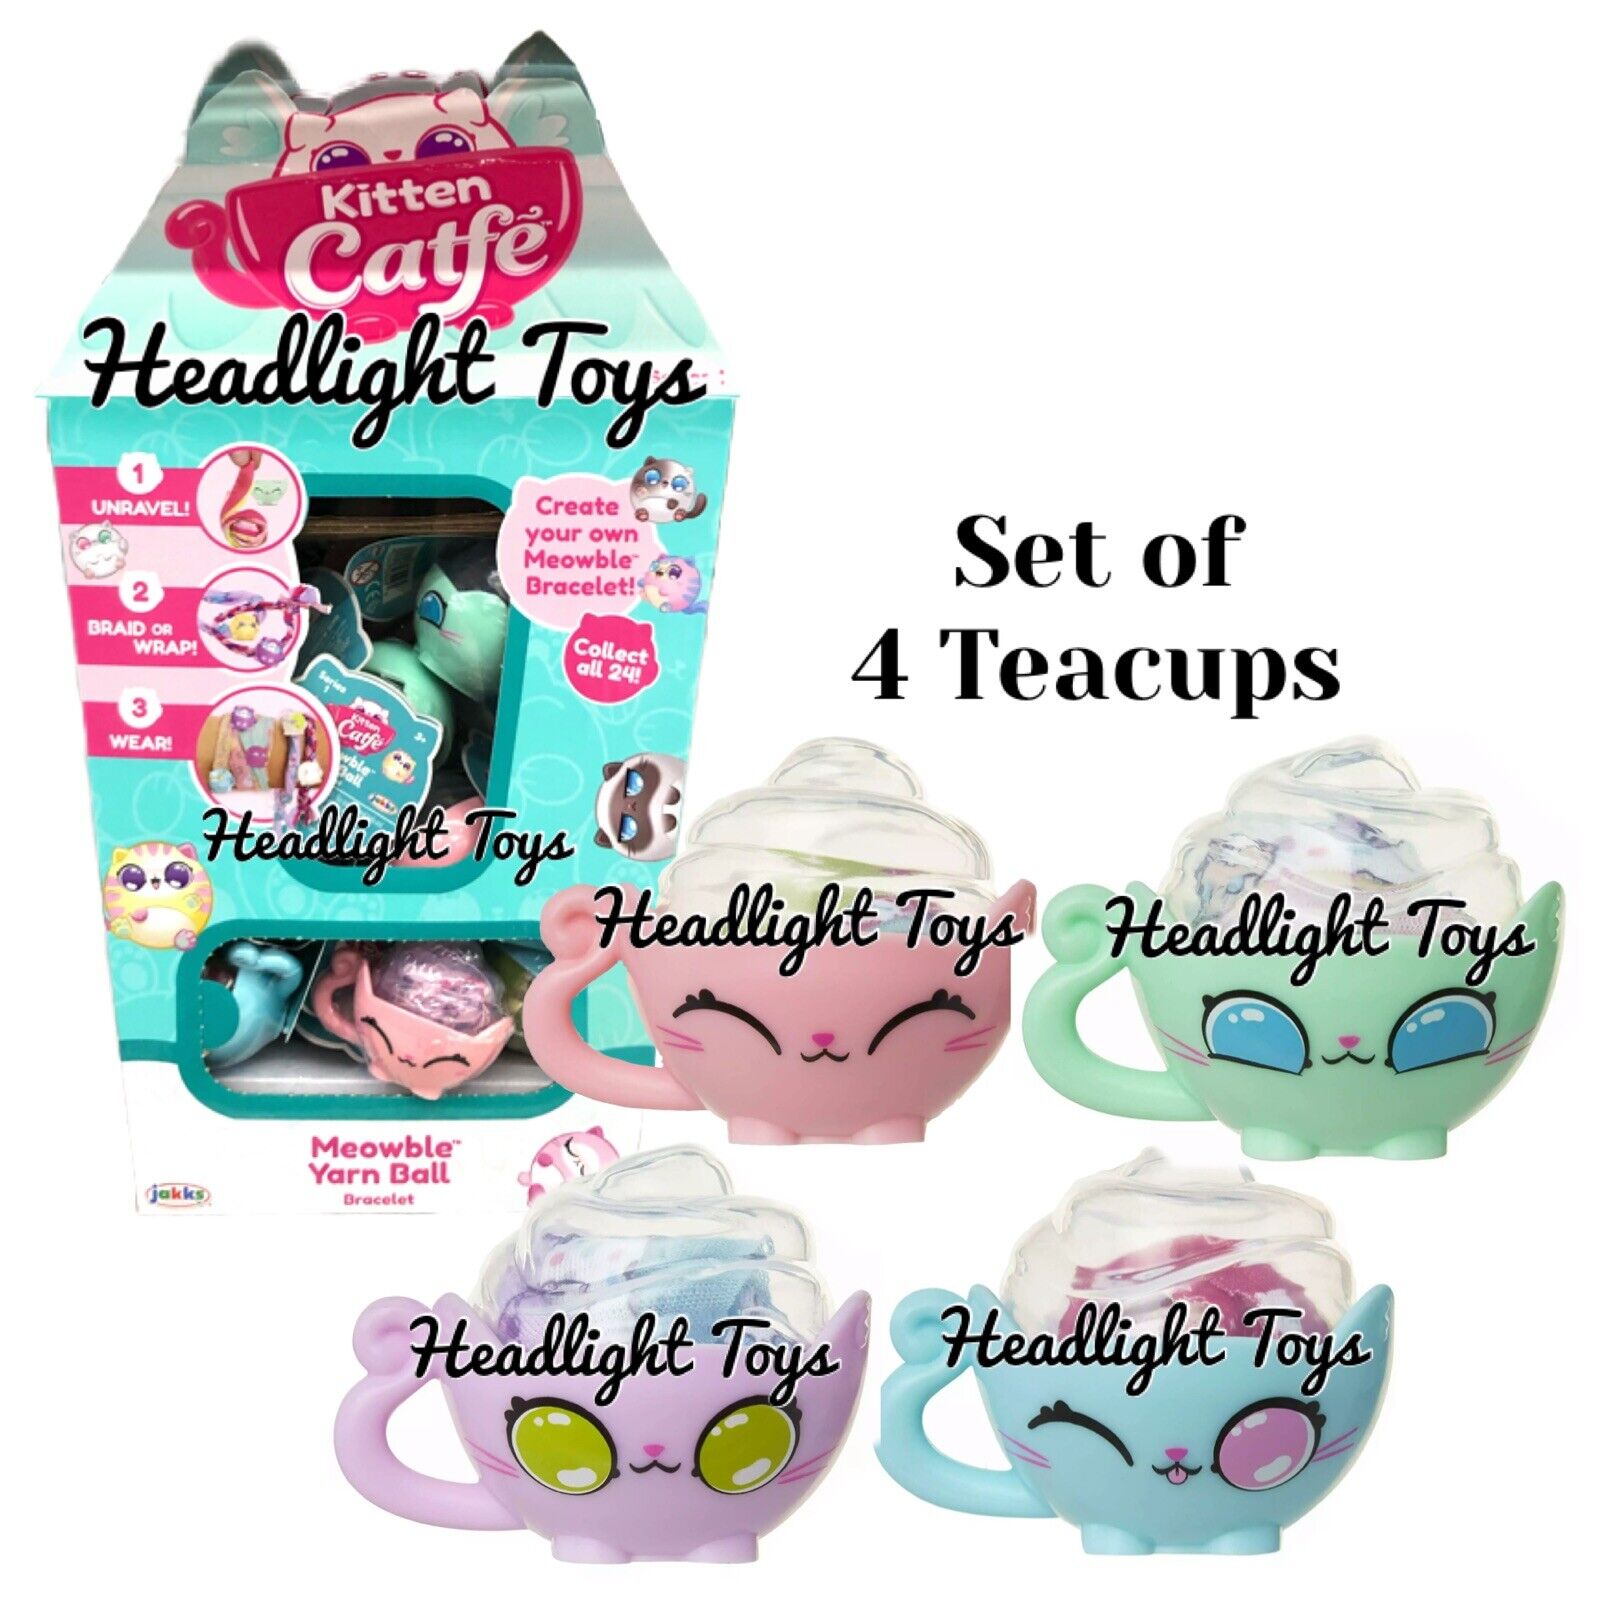 4 Kitten Catfe Meowble Yarn Ball Mystery Teacup Friendship Bracelet Charm Cafe JAKKS Pacific